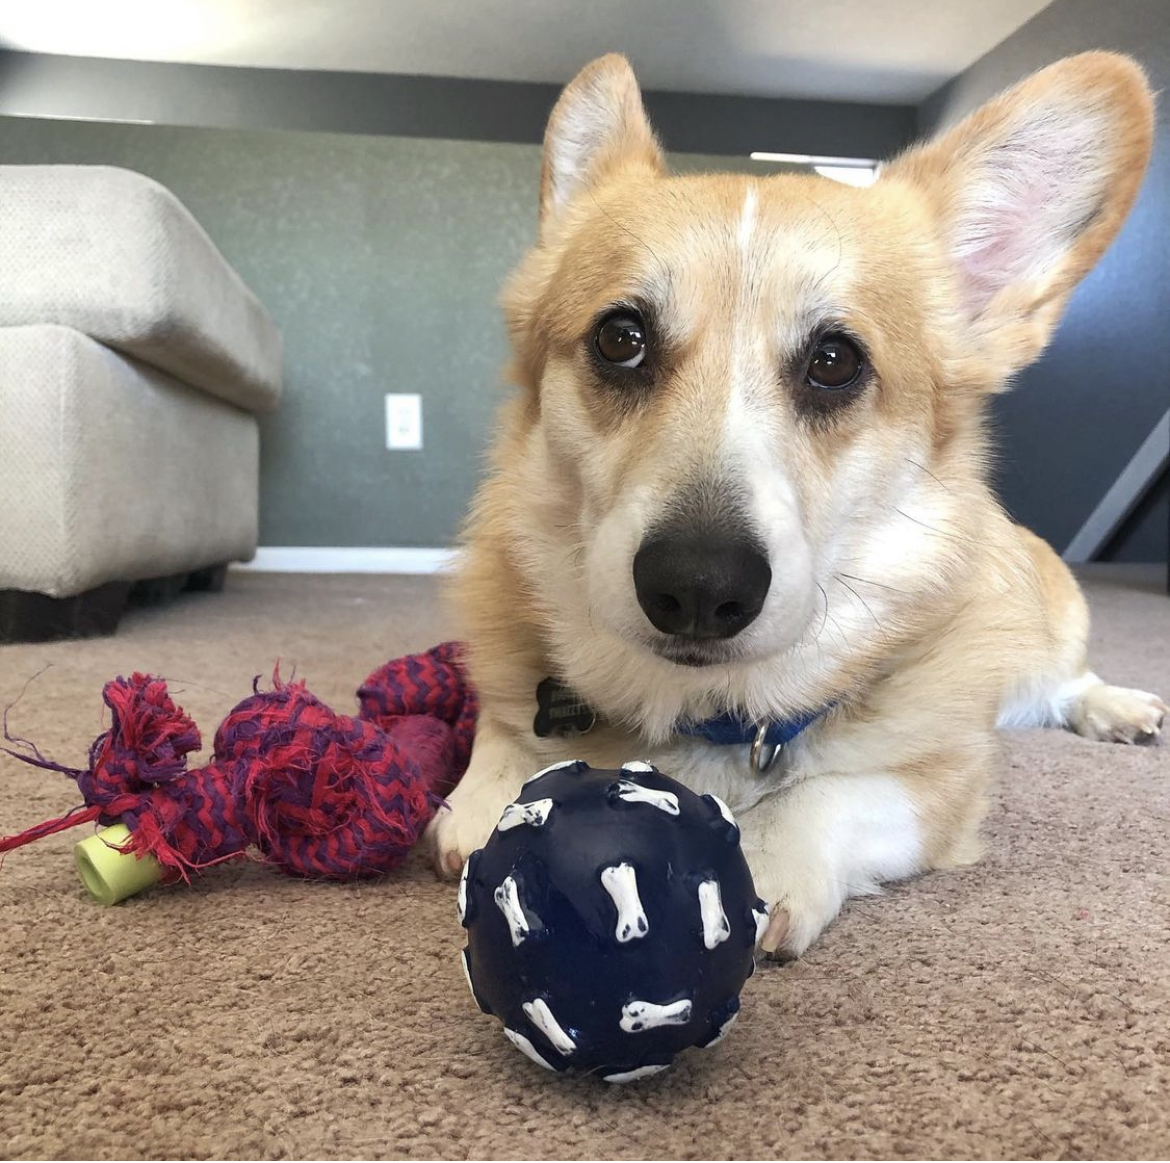 CORGI PUPPY LOVES TOYS SHAPED Like His BODY - favorite dog toys 